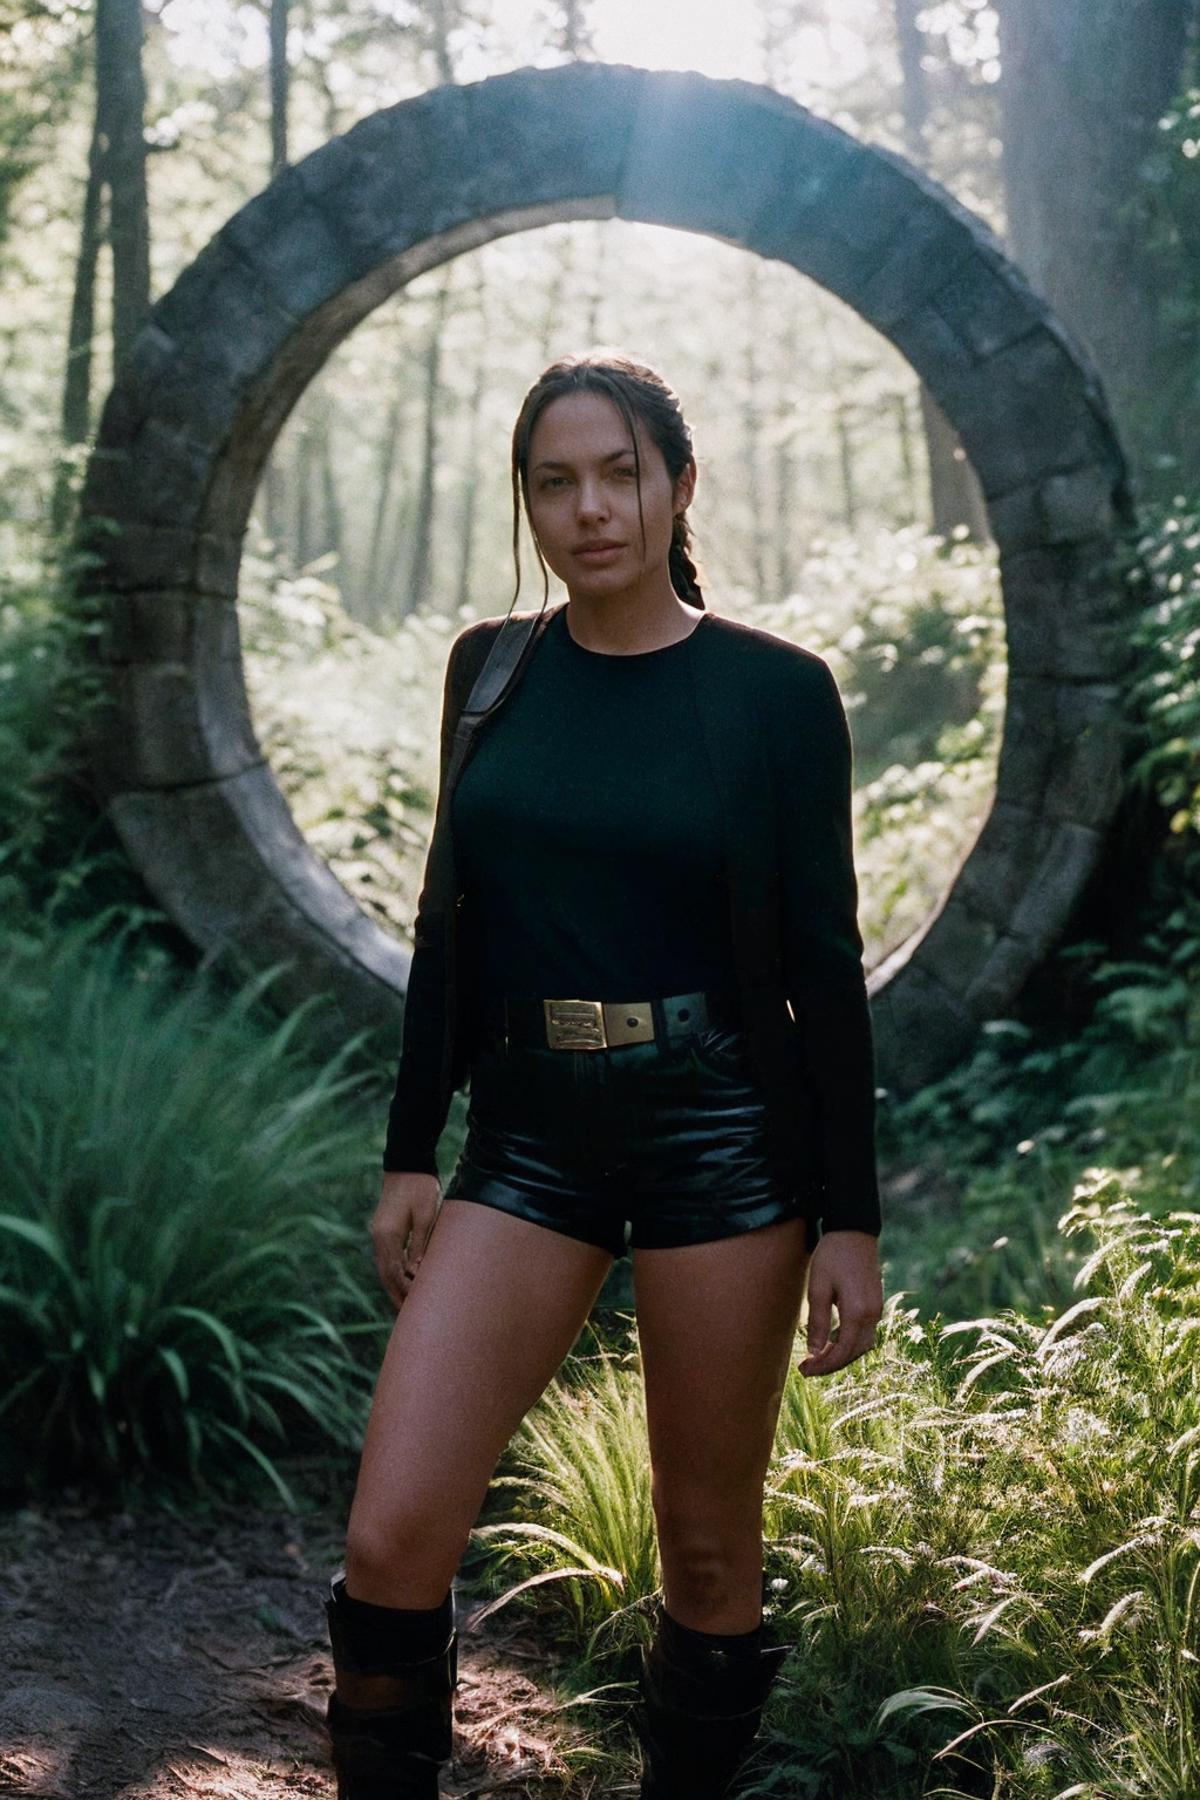 Tomb Raider's Lara Croft (Angelina Jolie) image by wensleyp01